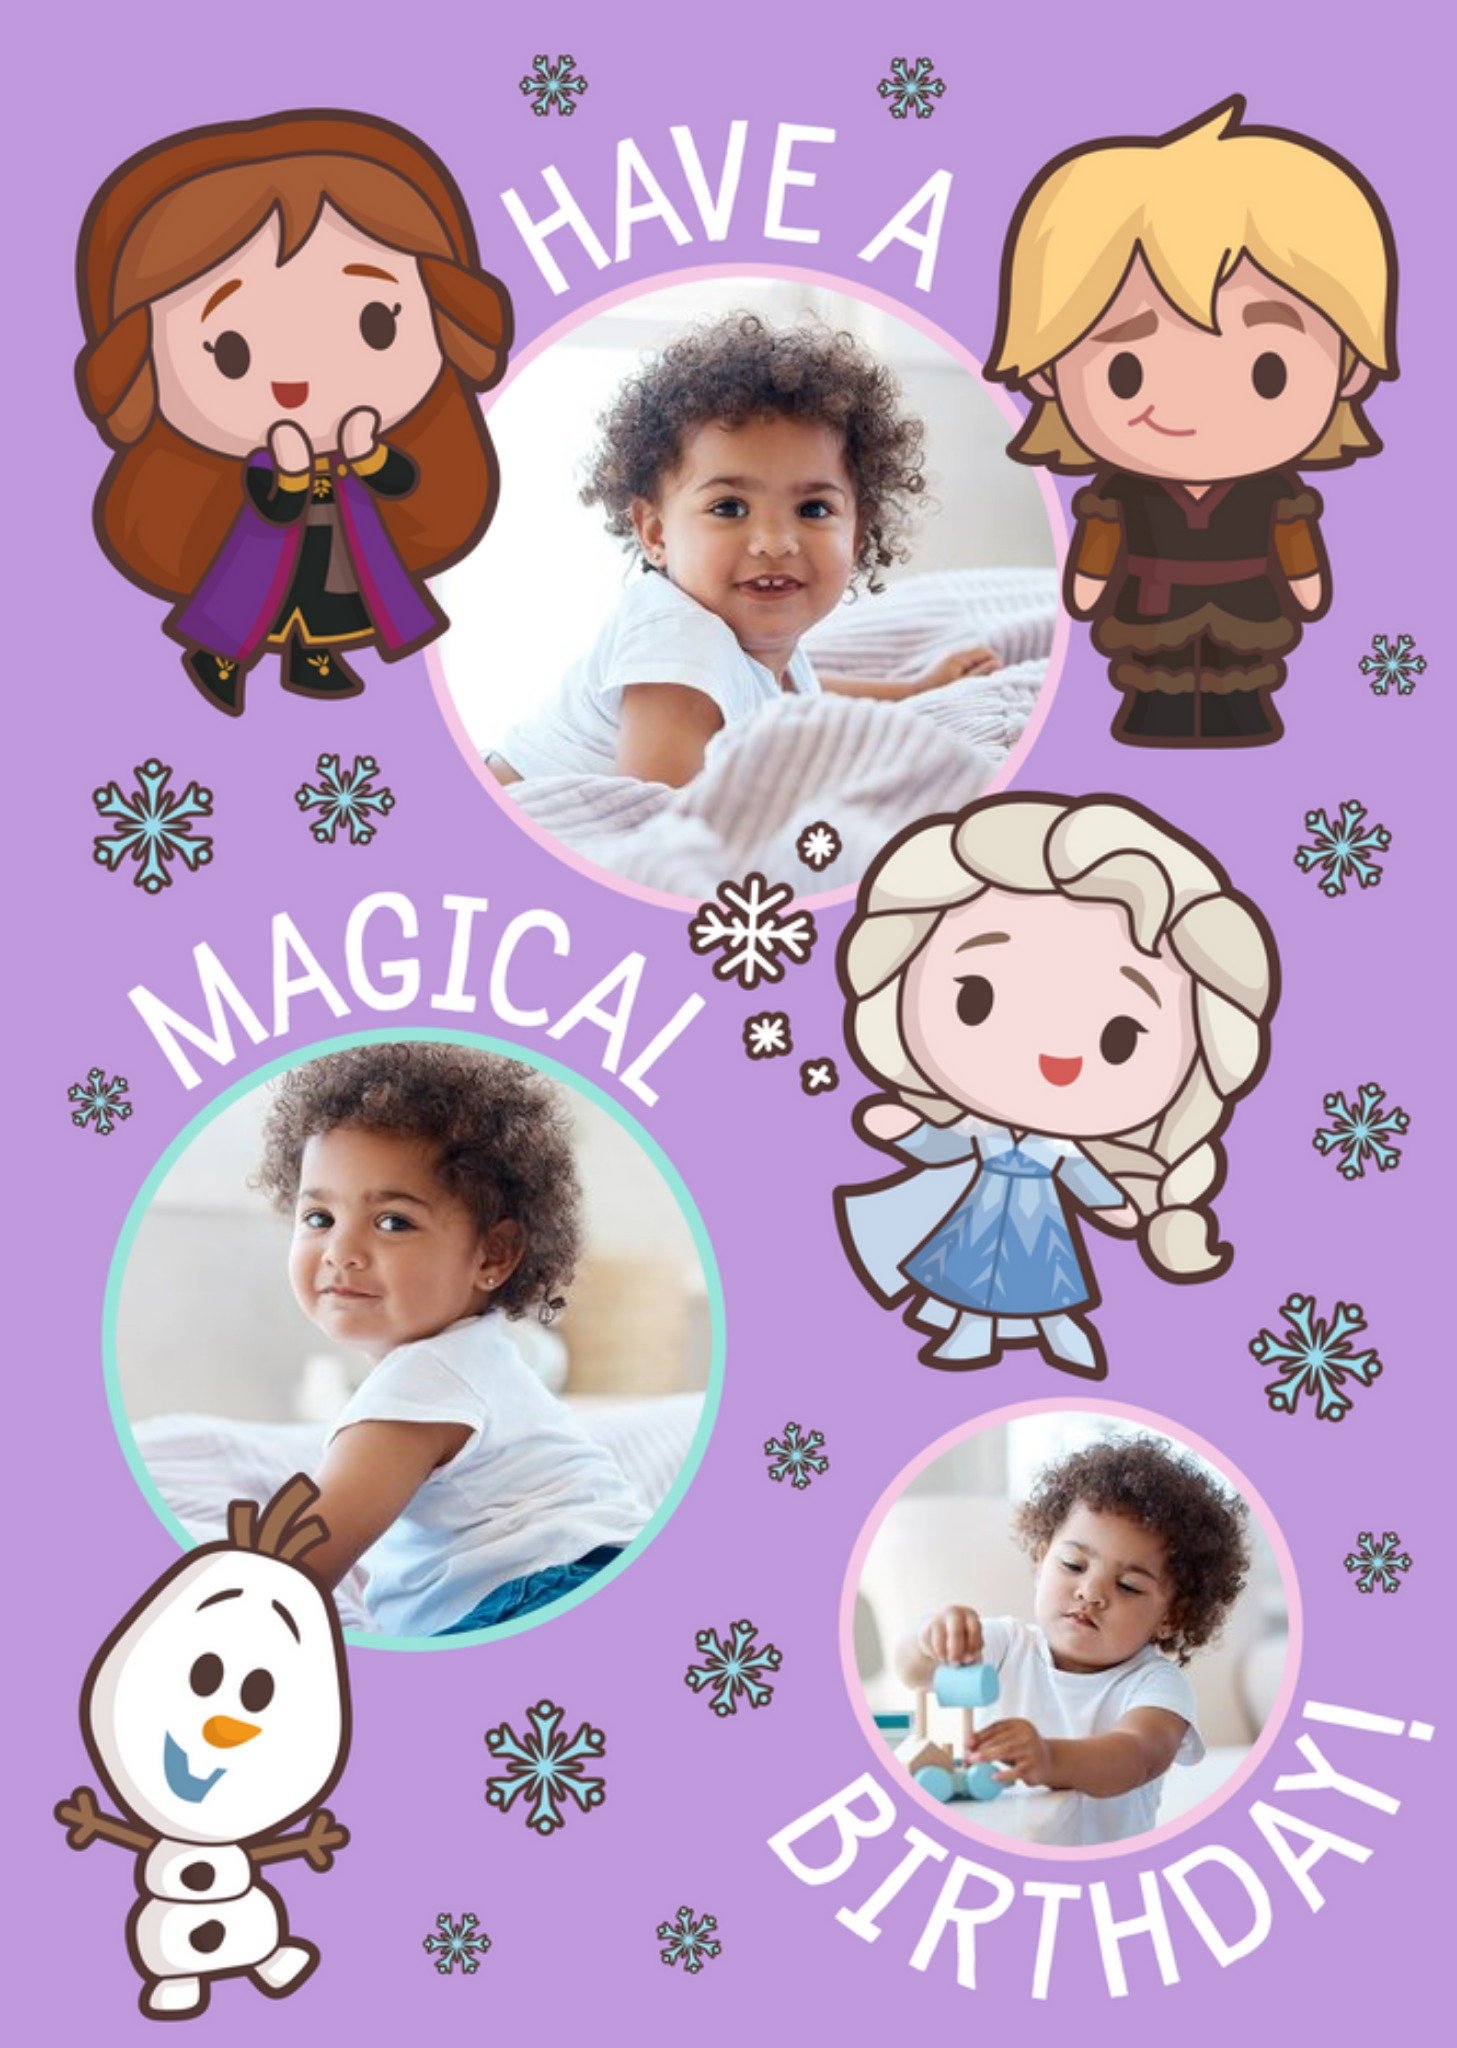 Elsa Olaf Kristof And Anna Magical Disney Frozen Photo Upload Birthday Card Ecard